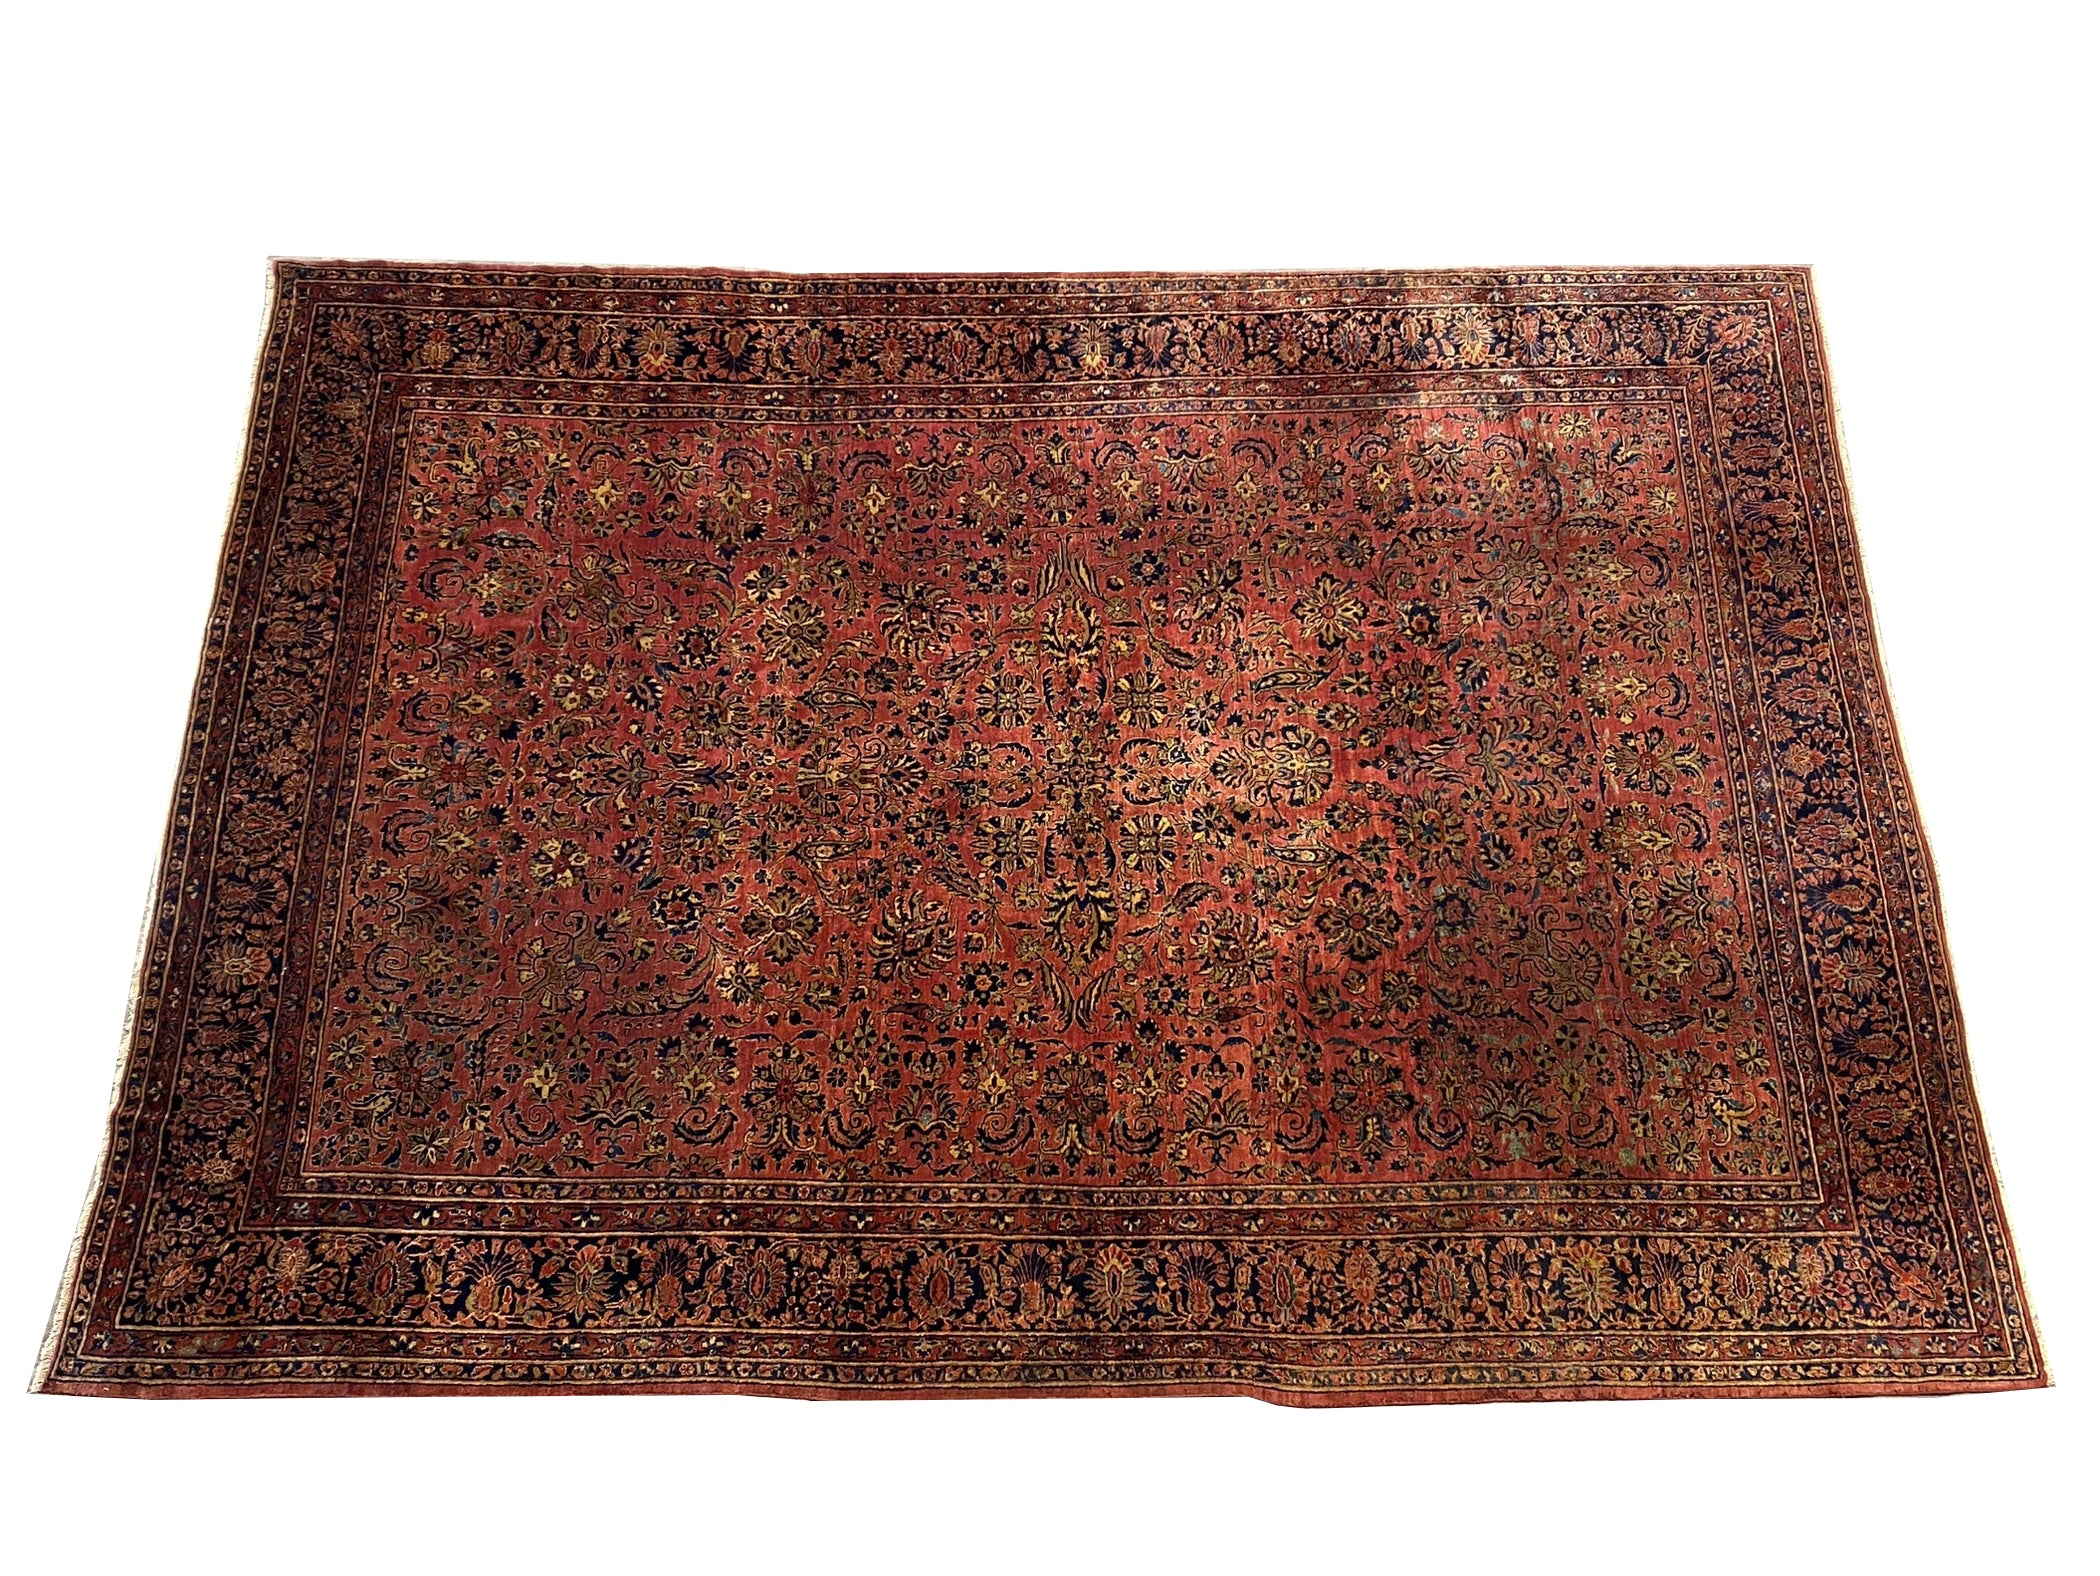 Large 11' x 15' ANTIQUE Persian Sarouk Rug #F-6395